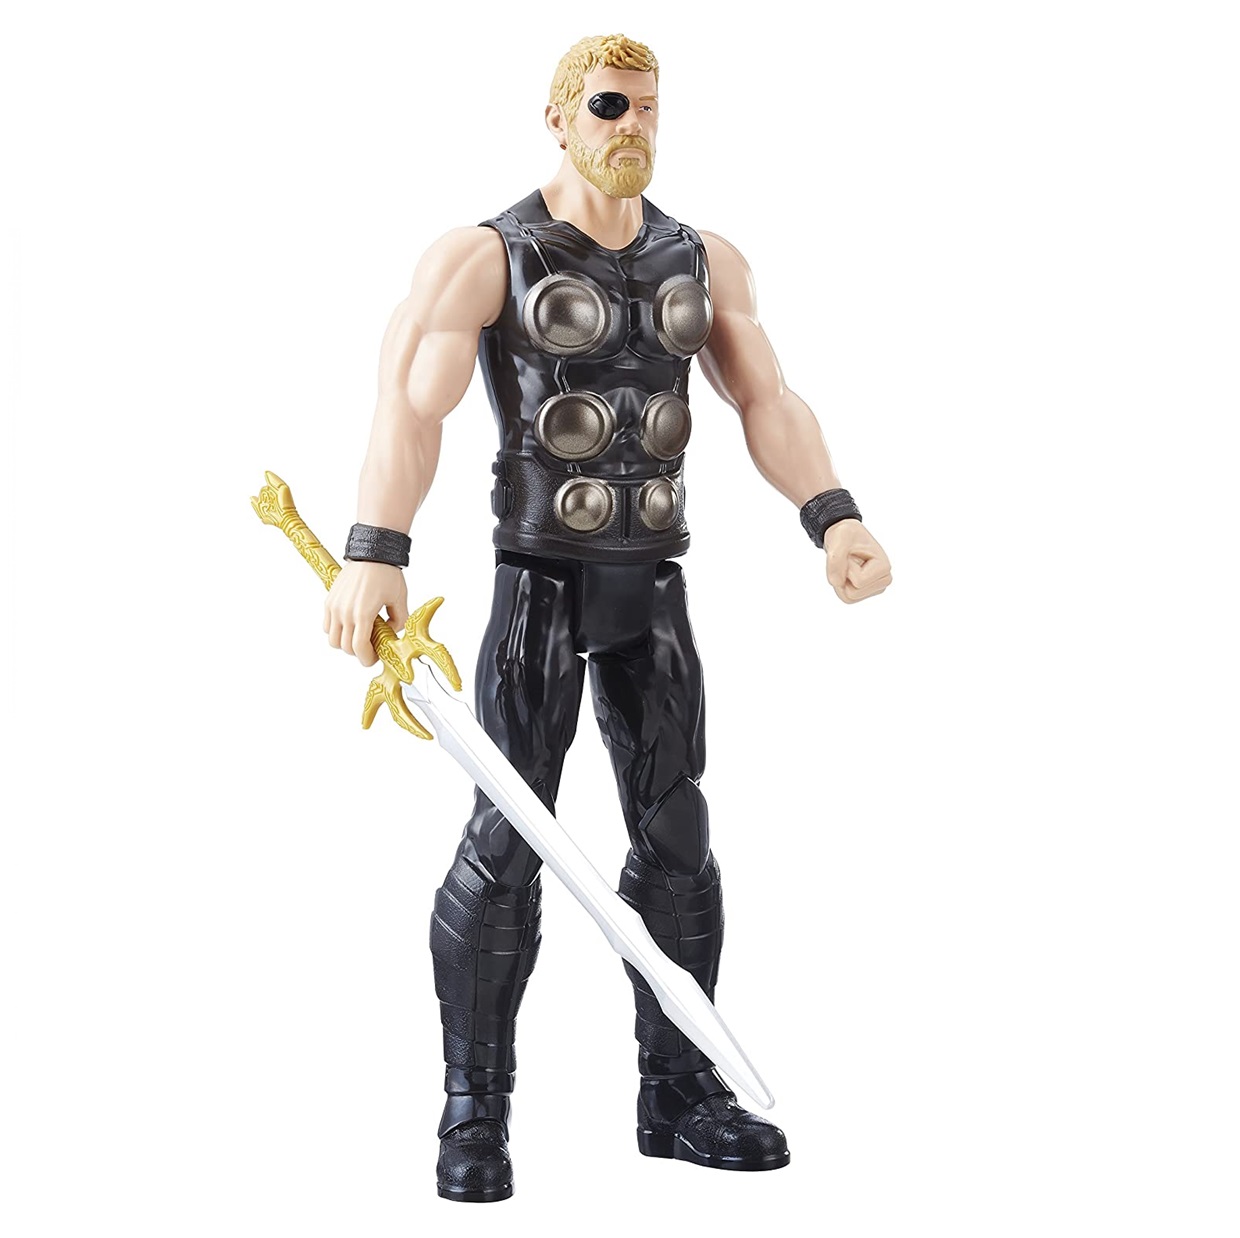 Thor Avengers Infinity War Figura Titan Hero Series 12 PuLG